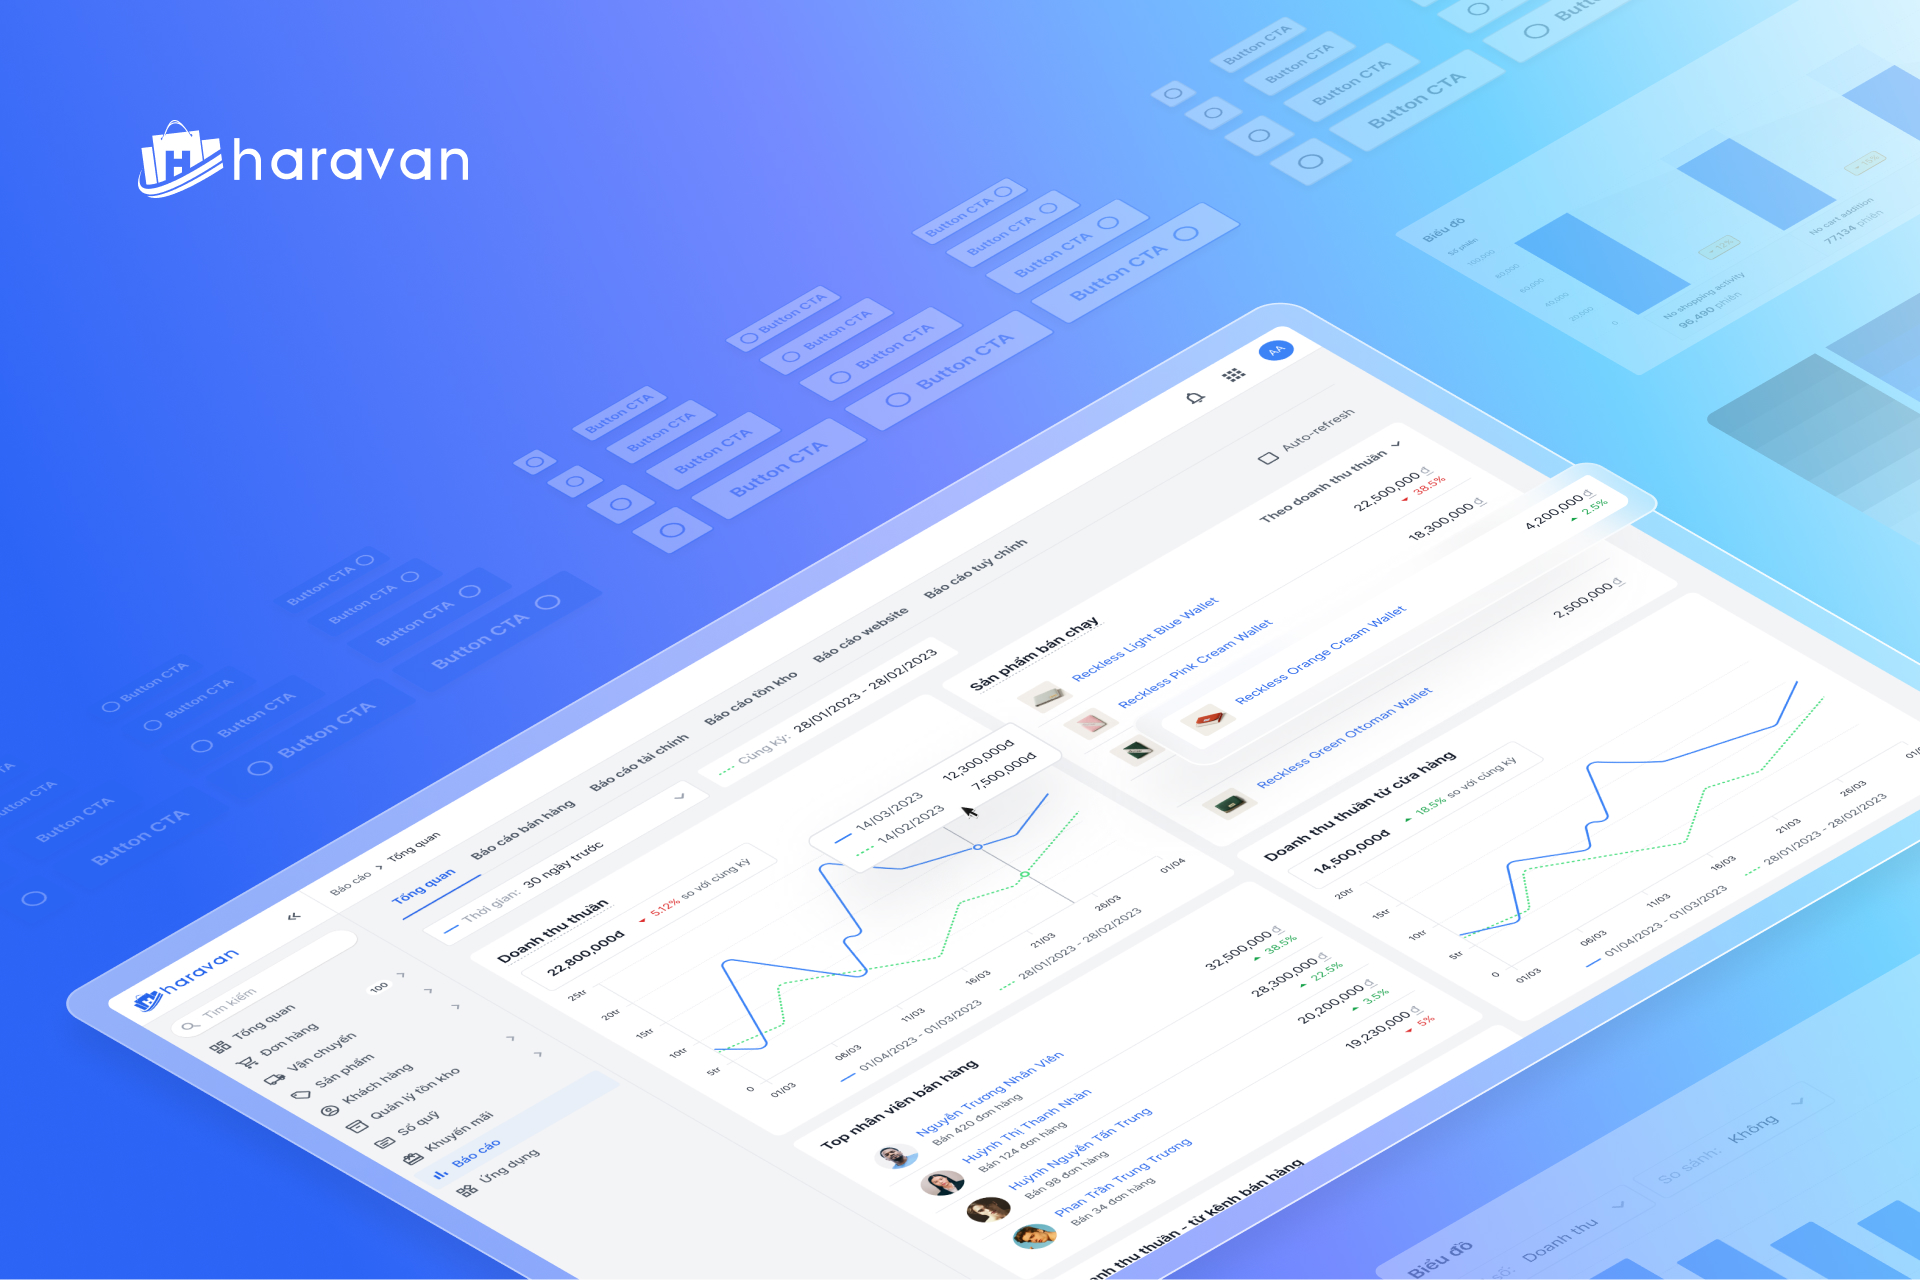 Haravan design system for scalability